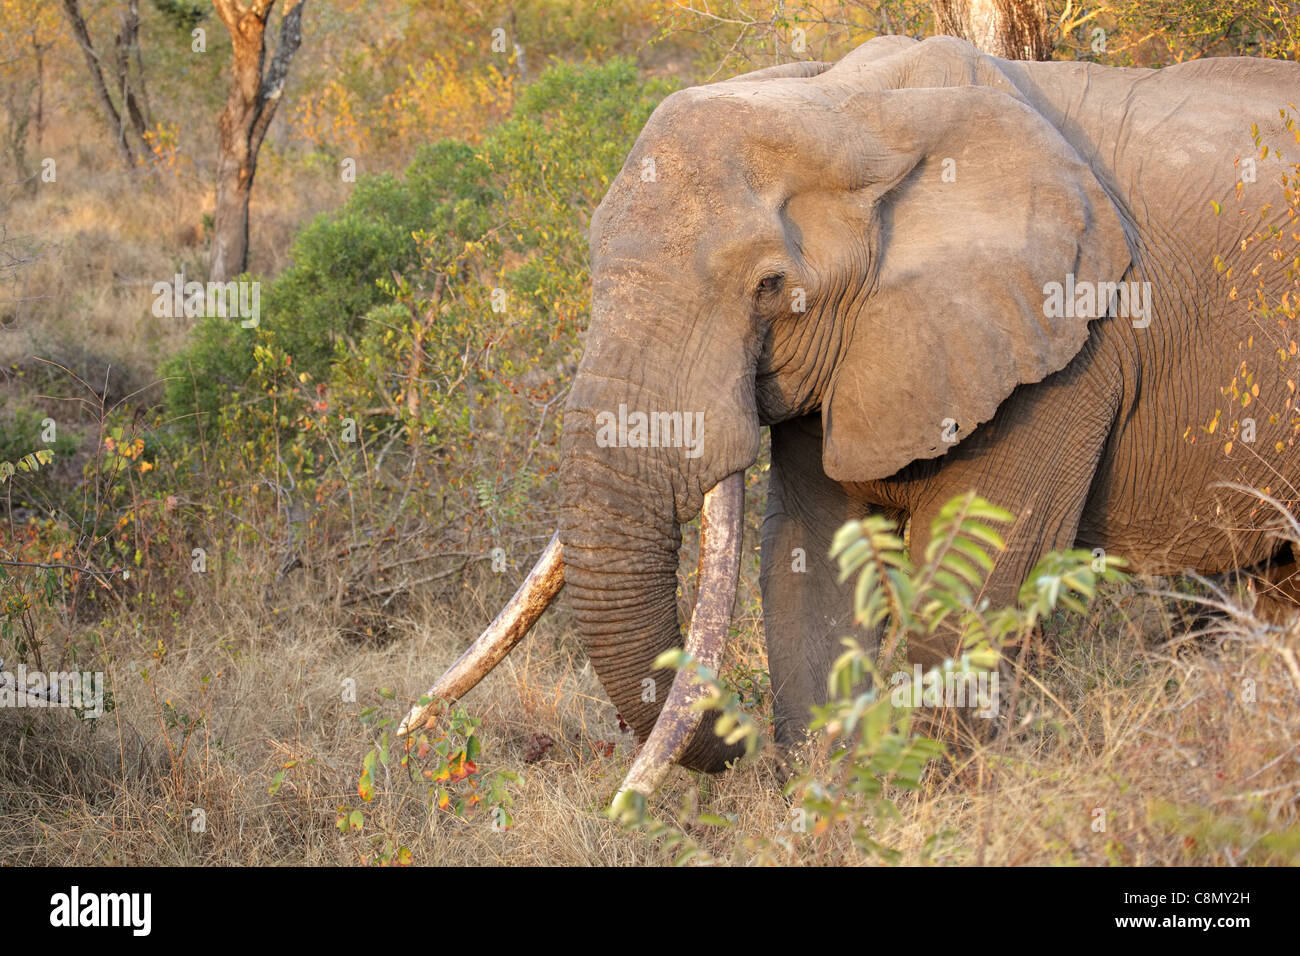 Bull elefante africano (Loxodonta africana) con grandes colmillos, Sabie-Sand reserva natural, Sudáfrica Foto de stock